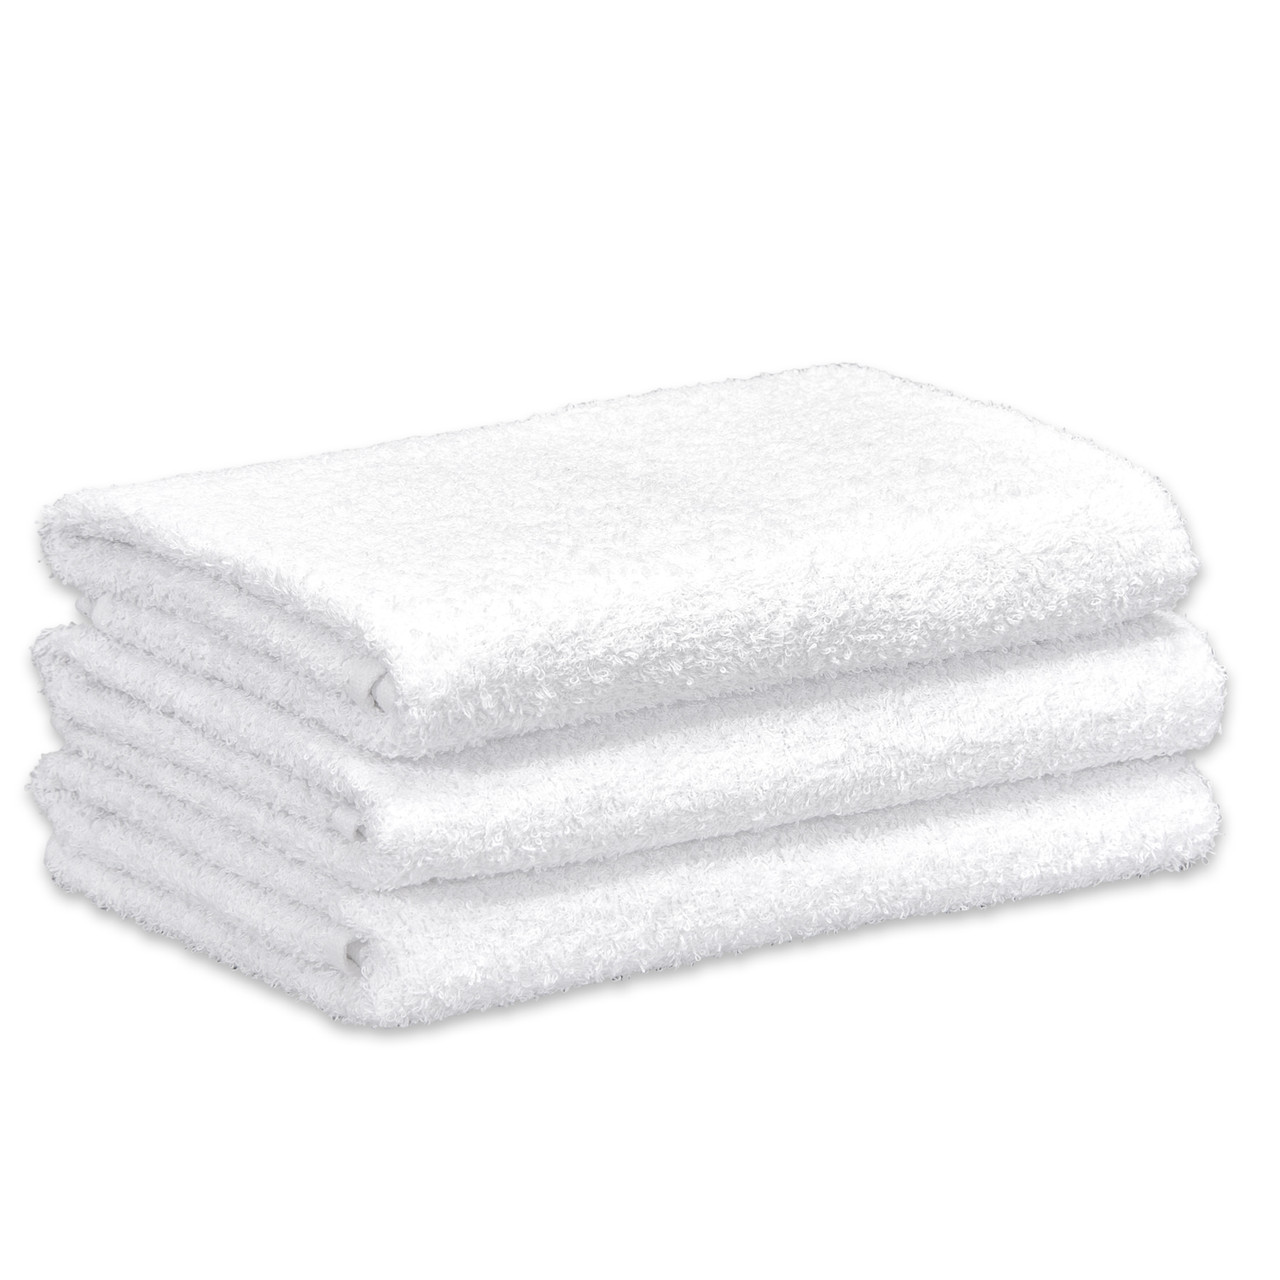 https://cdn11.bigcommerce.com/s-a5uwe4c7wz/images/stencil/1280x1280/products/494/1388/Cotton-Terry-Bath-Towels-20x40-White__00879.1582650432.jpg?c=1